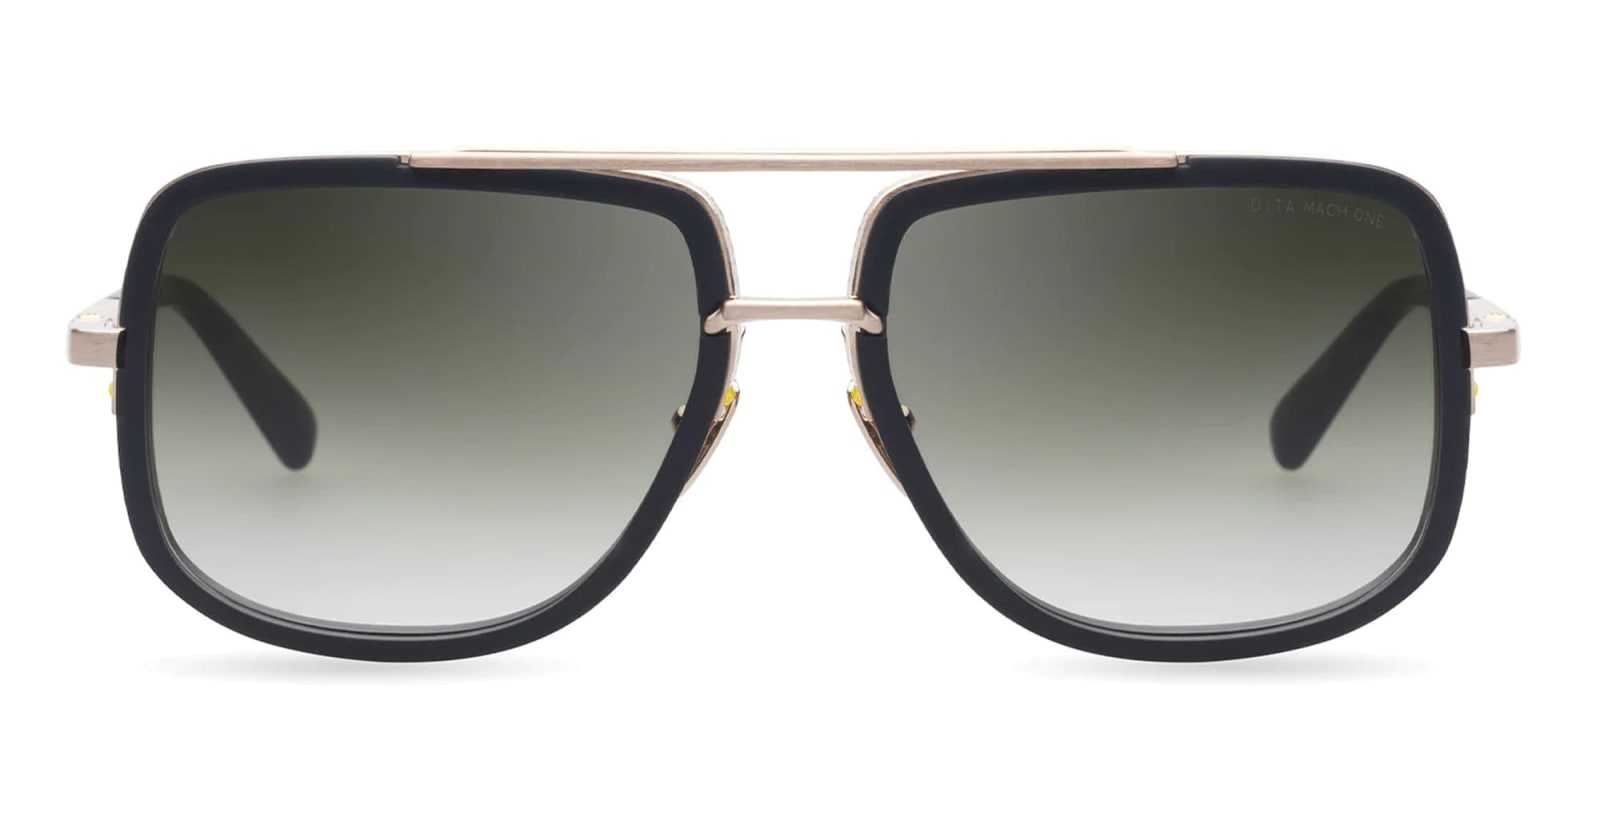 Mach-one - Matte Black / Antique 12k Gold Sunglasses